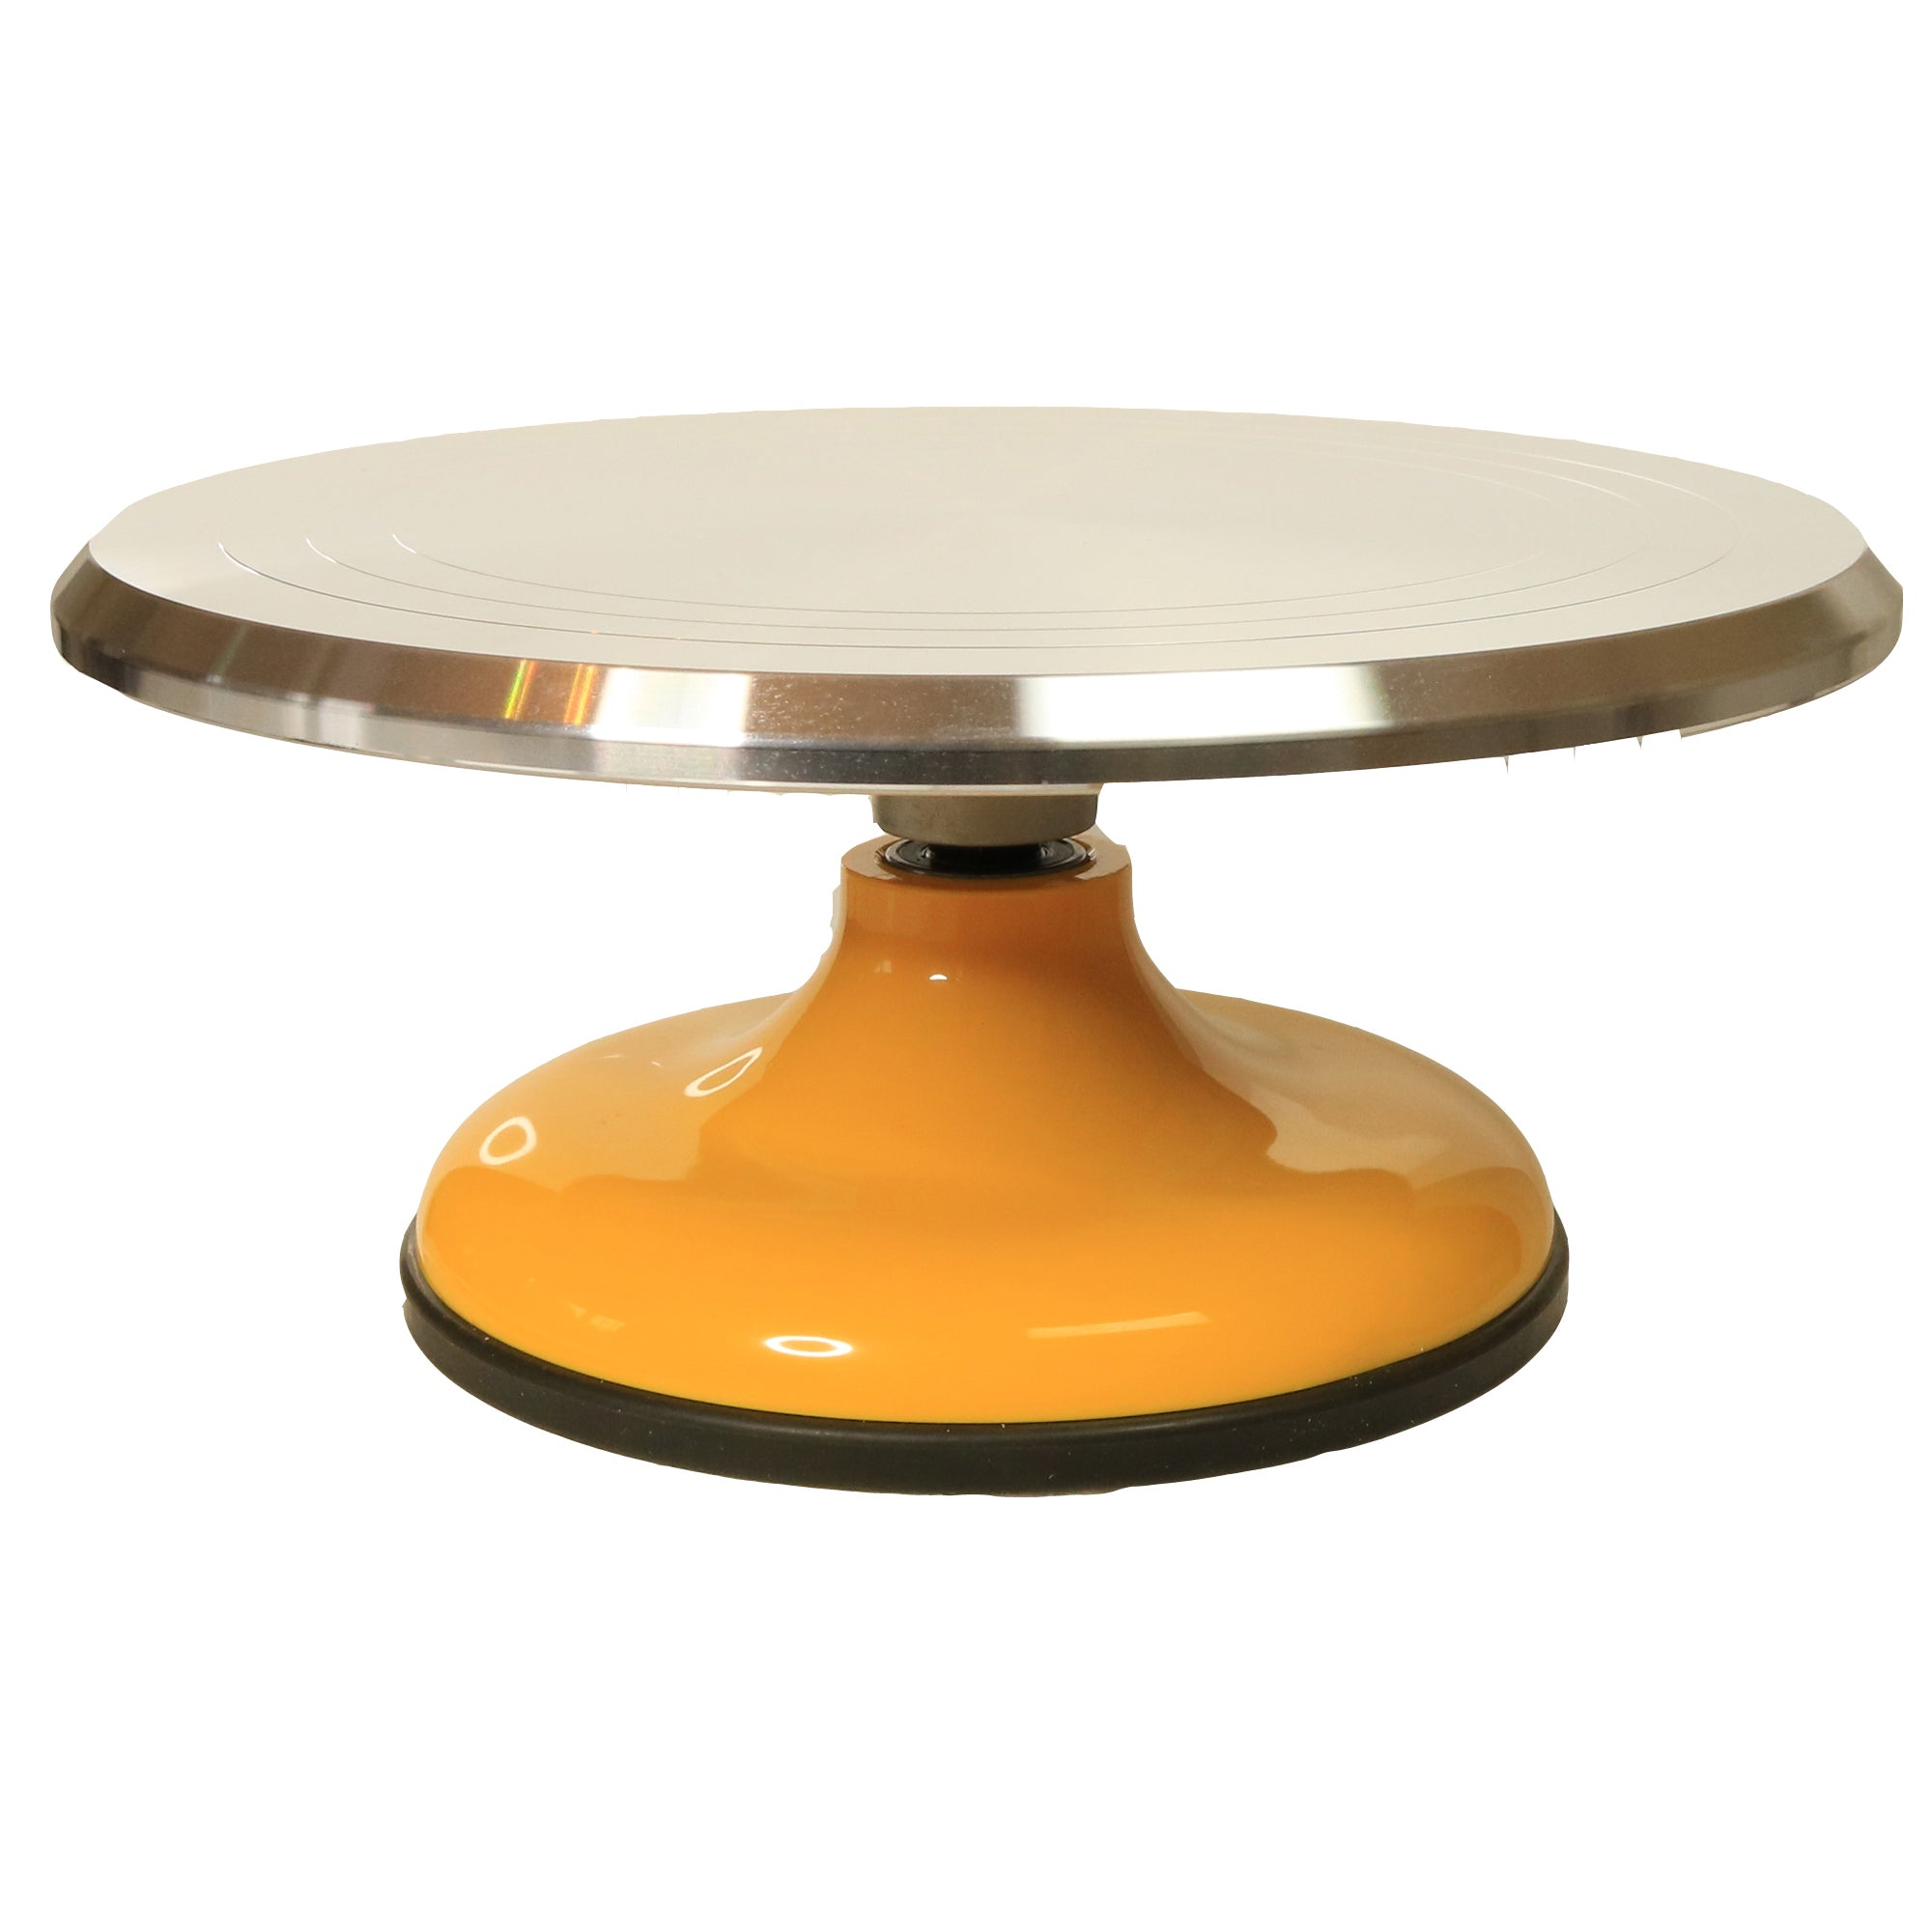 28cm Pastry Turntable Plastic Cake Rotating Table Anti-skid Round